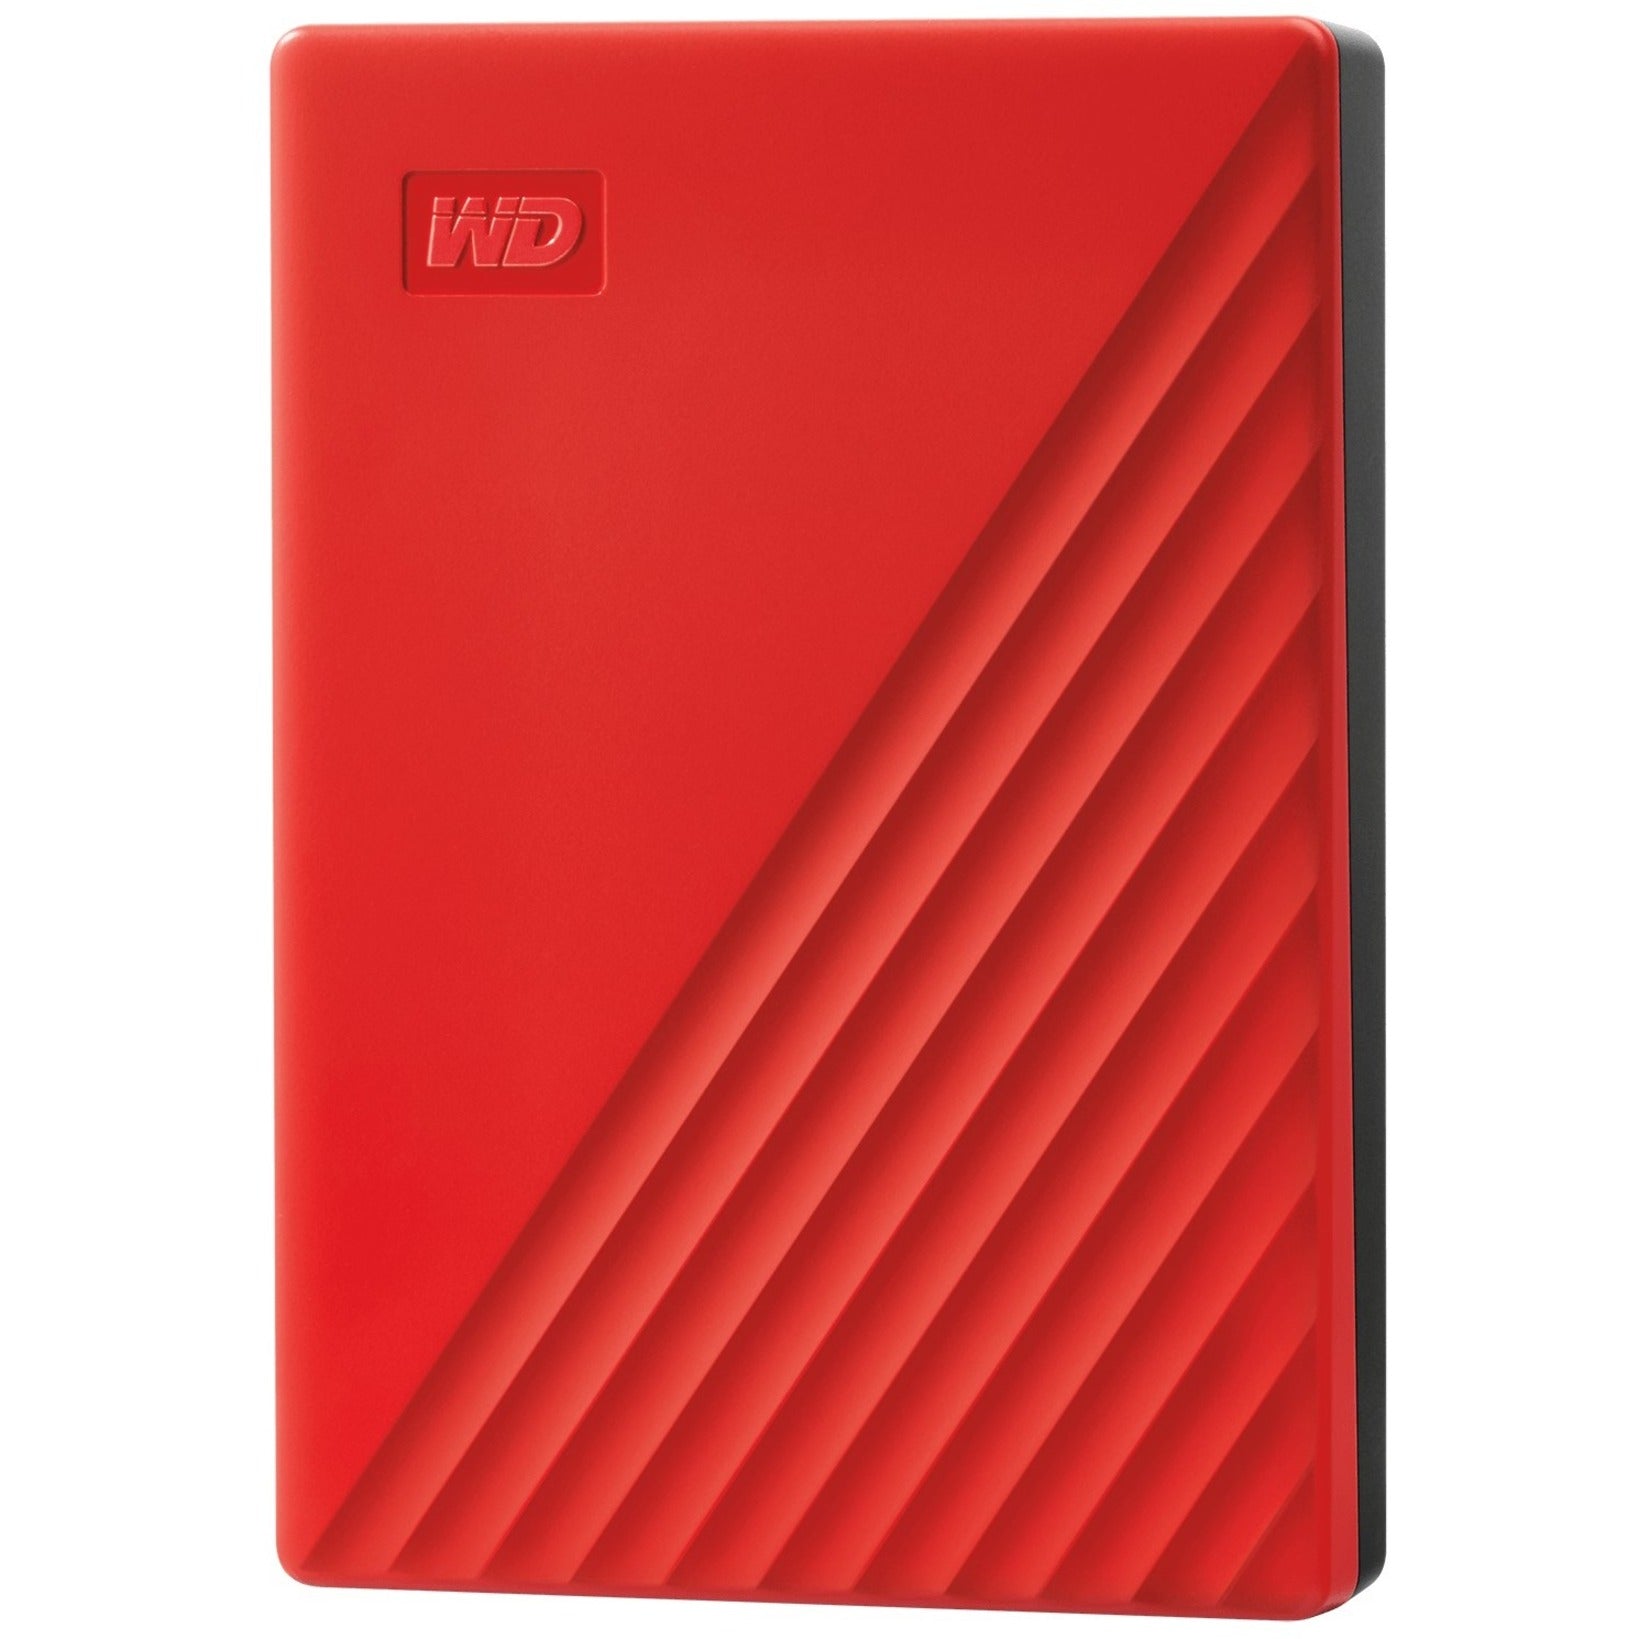 WD WDBPKJ0040BRD-WESN 4TB My Passport Portable Hard Drive, USB 3.0, 3 Year Warranty